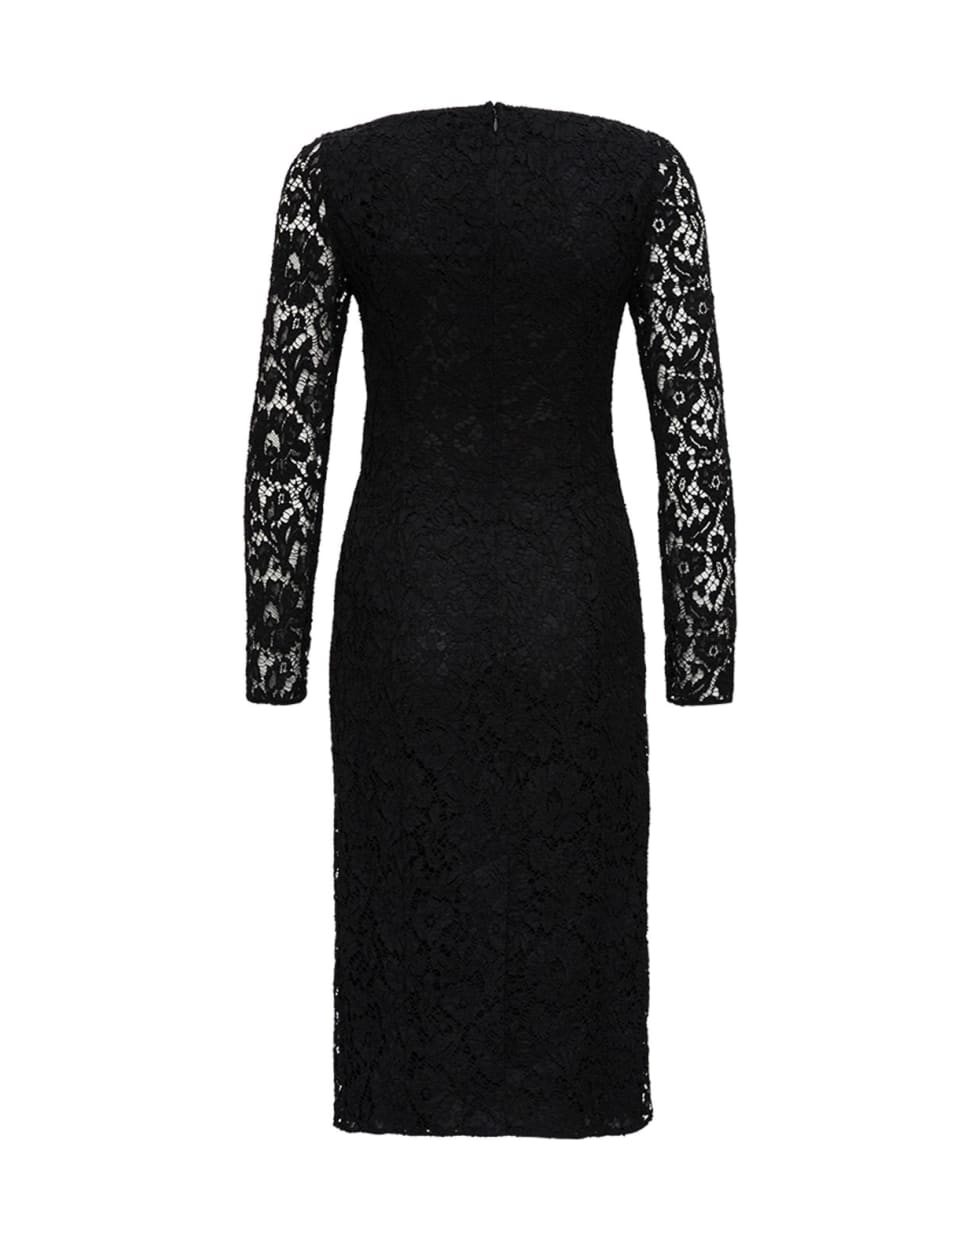 Valentino Long Dress In Black Lace - Black